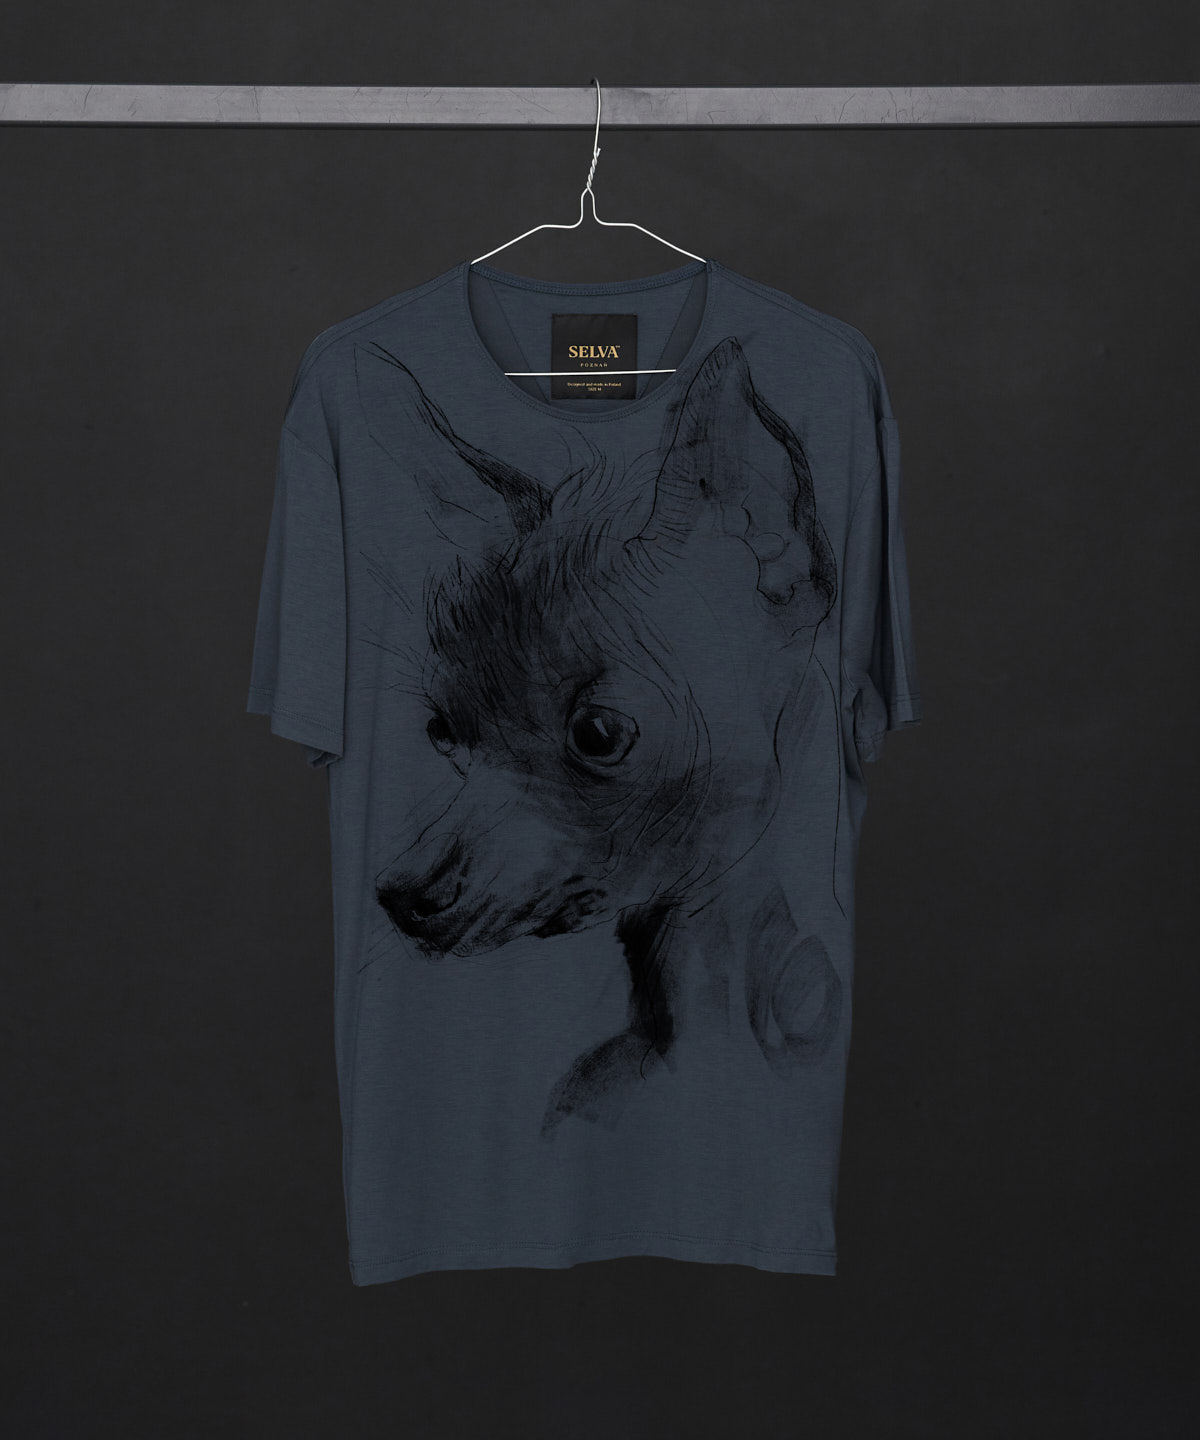 Chinese Crested Dog dark cool gray t-shirt MAN